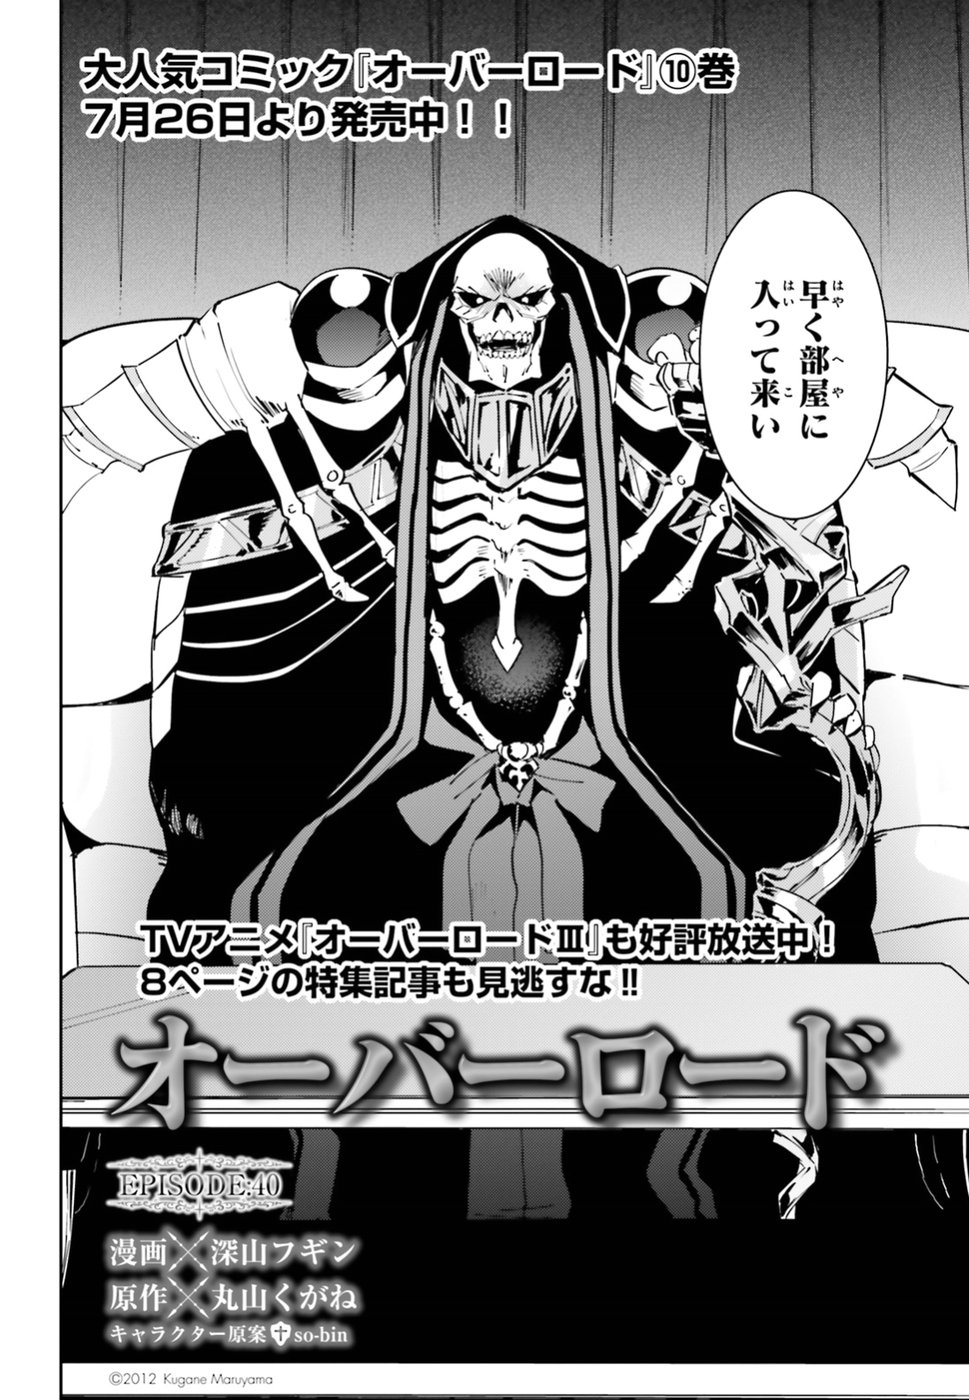 overlord manga chapter 14